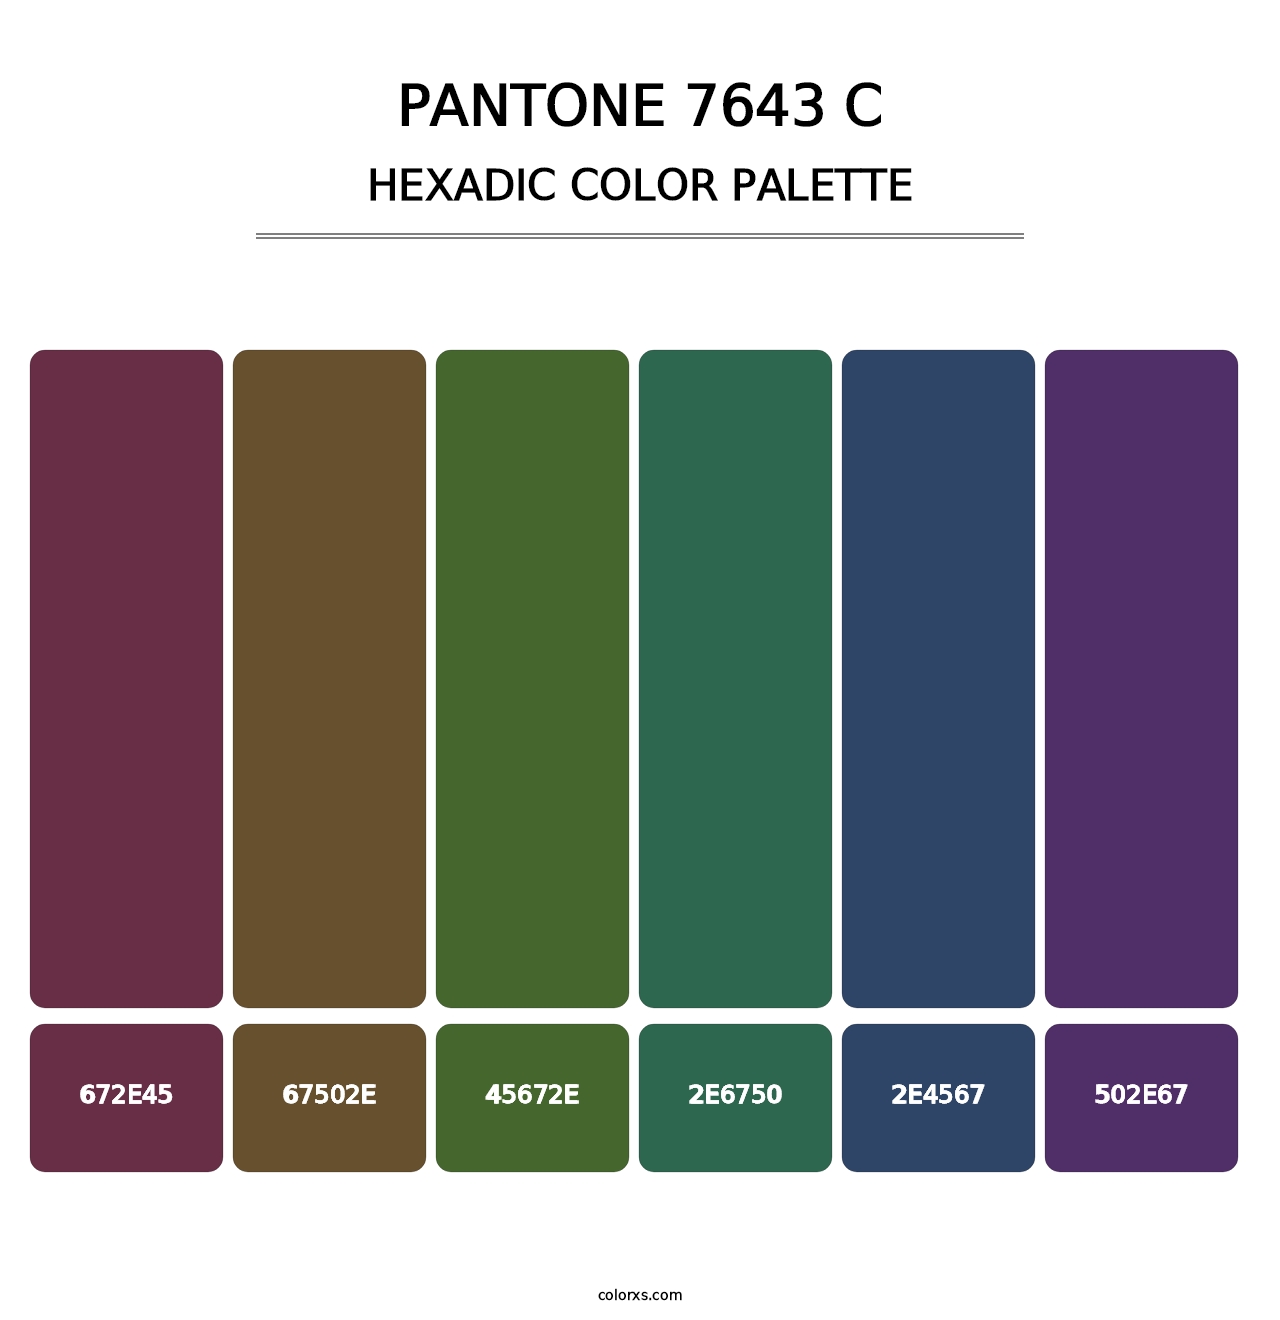 PANTONE 7643 C - Hexadic Color Palette